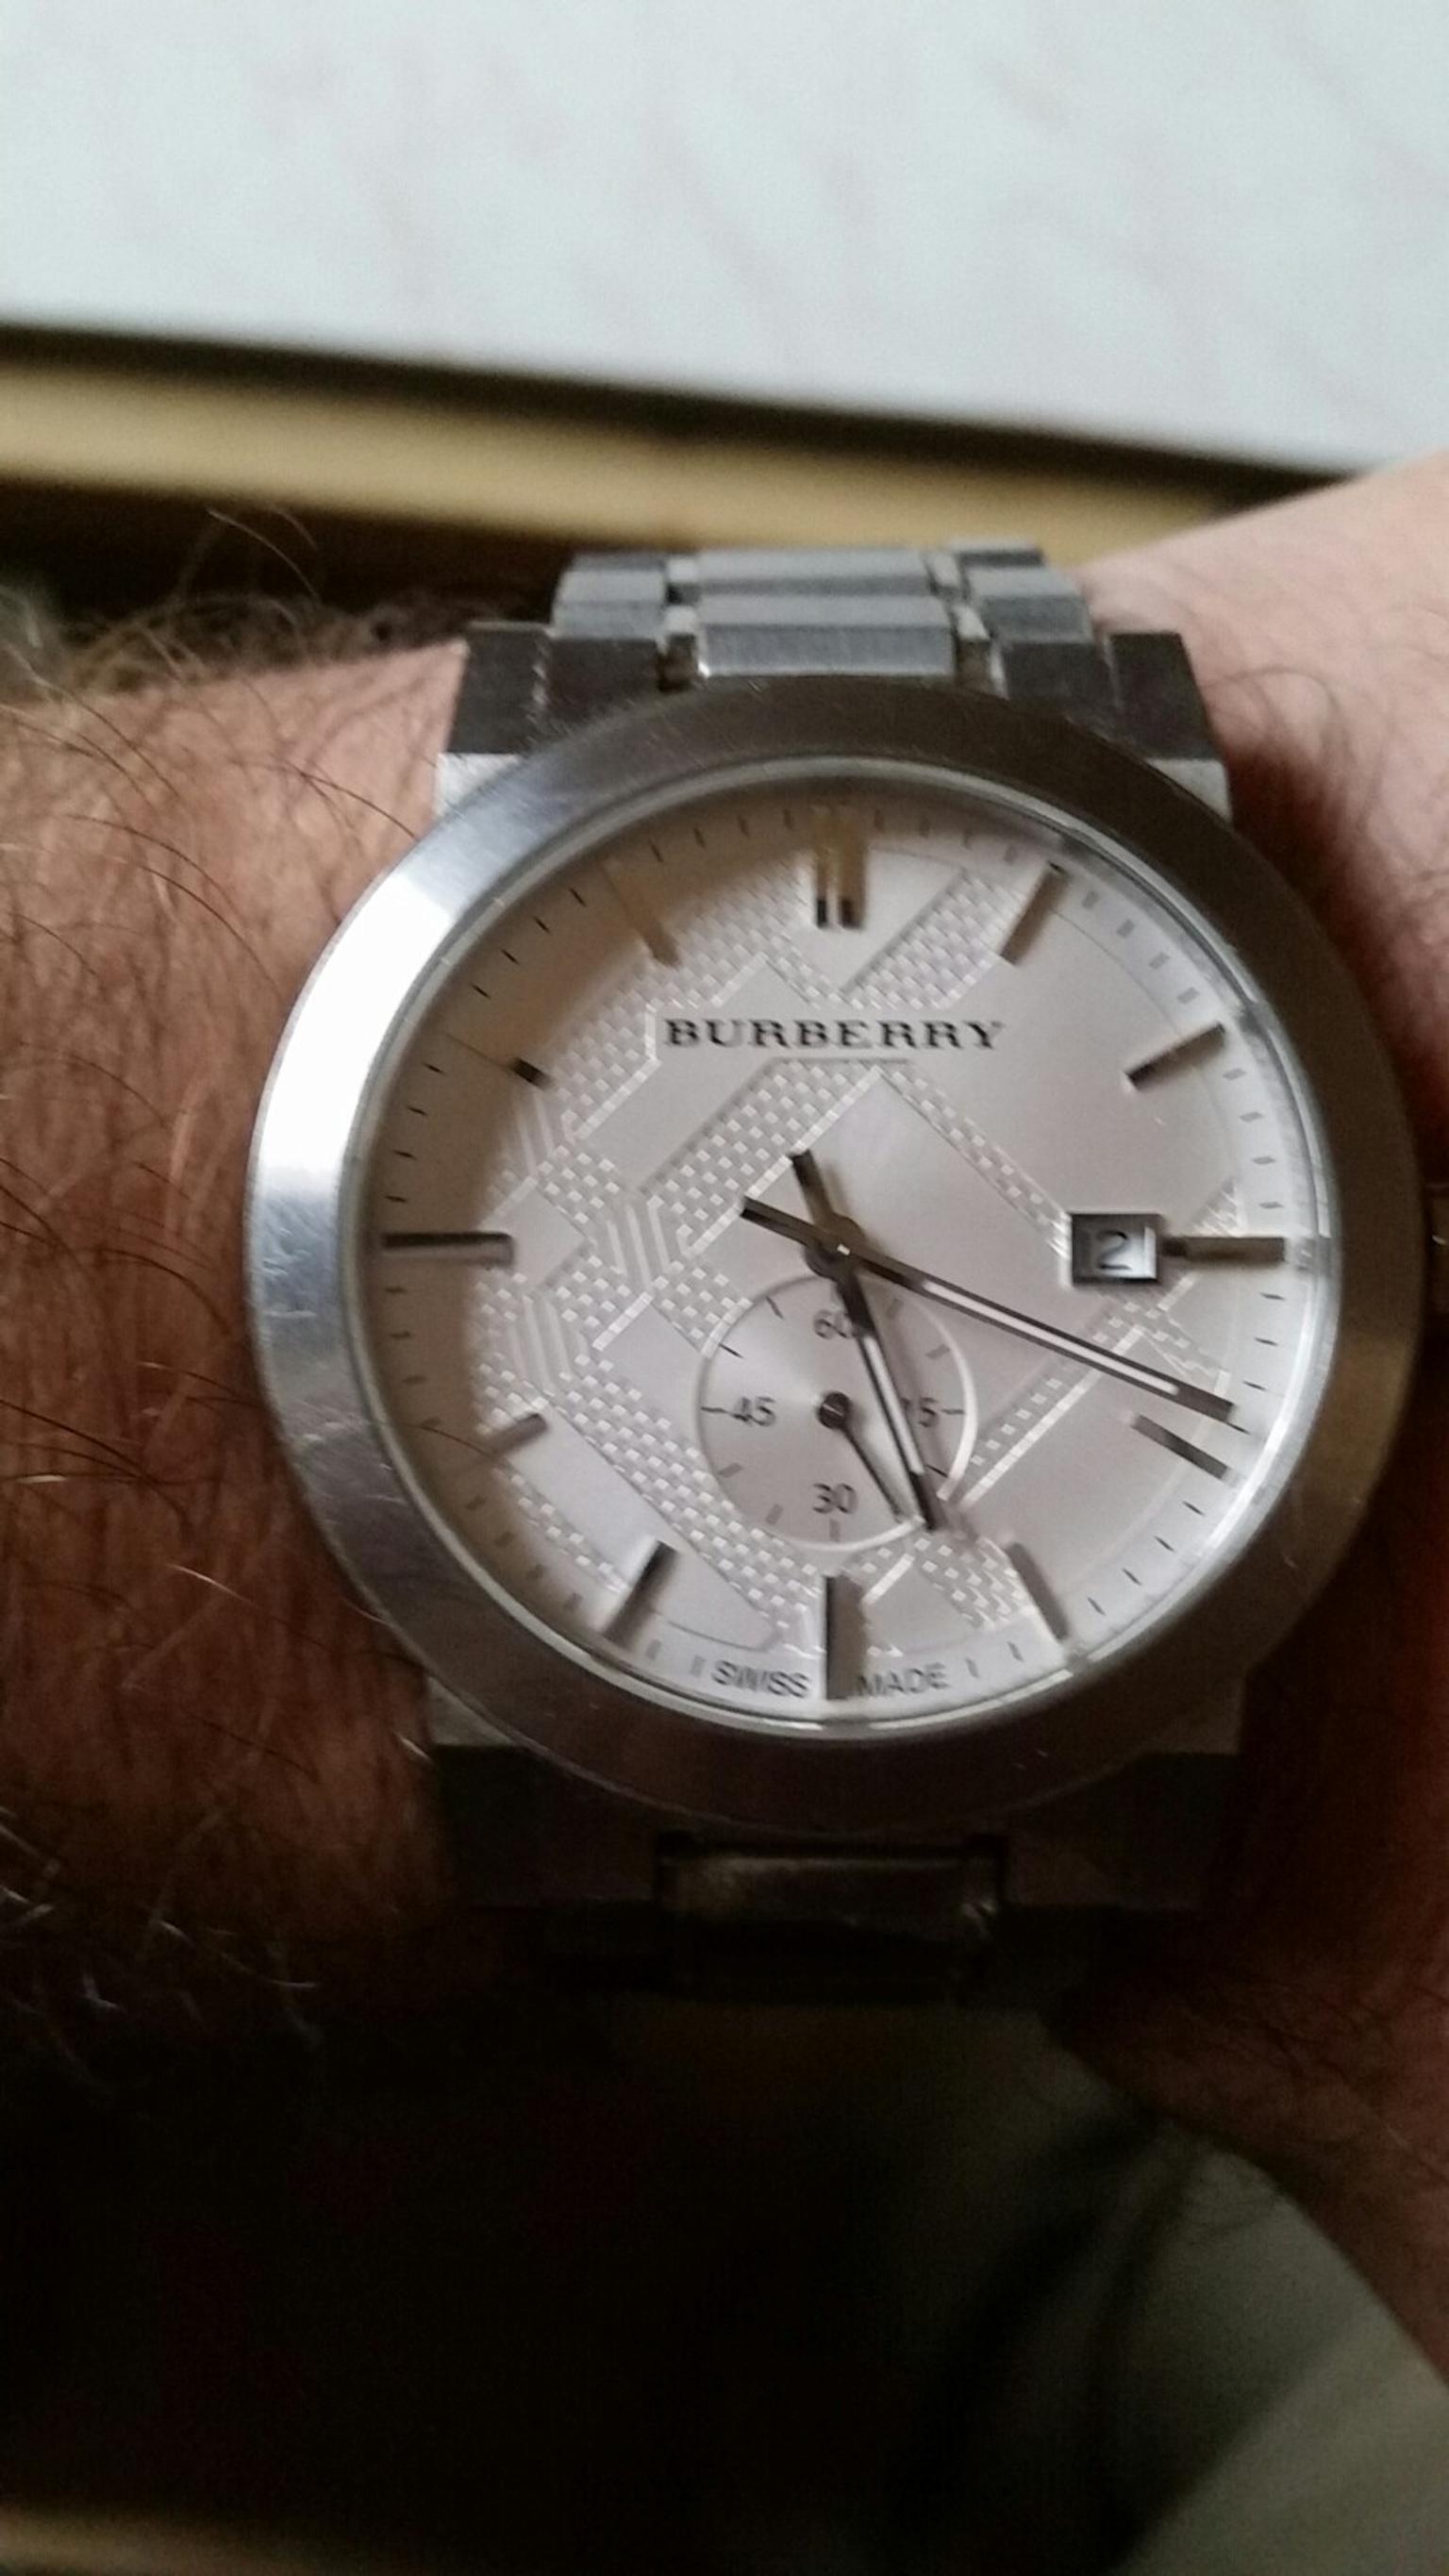 burberry sapphire crystal watch